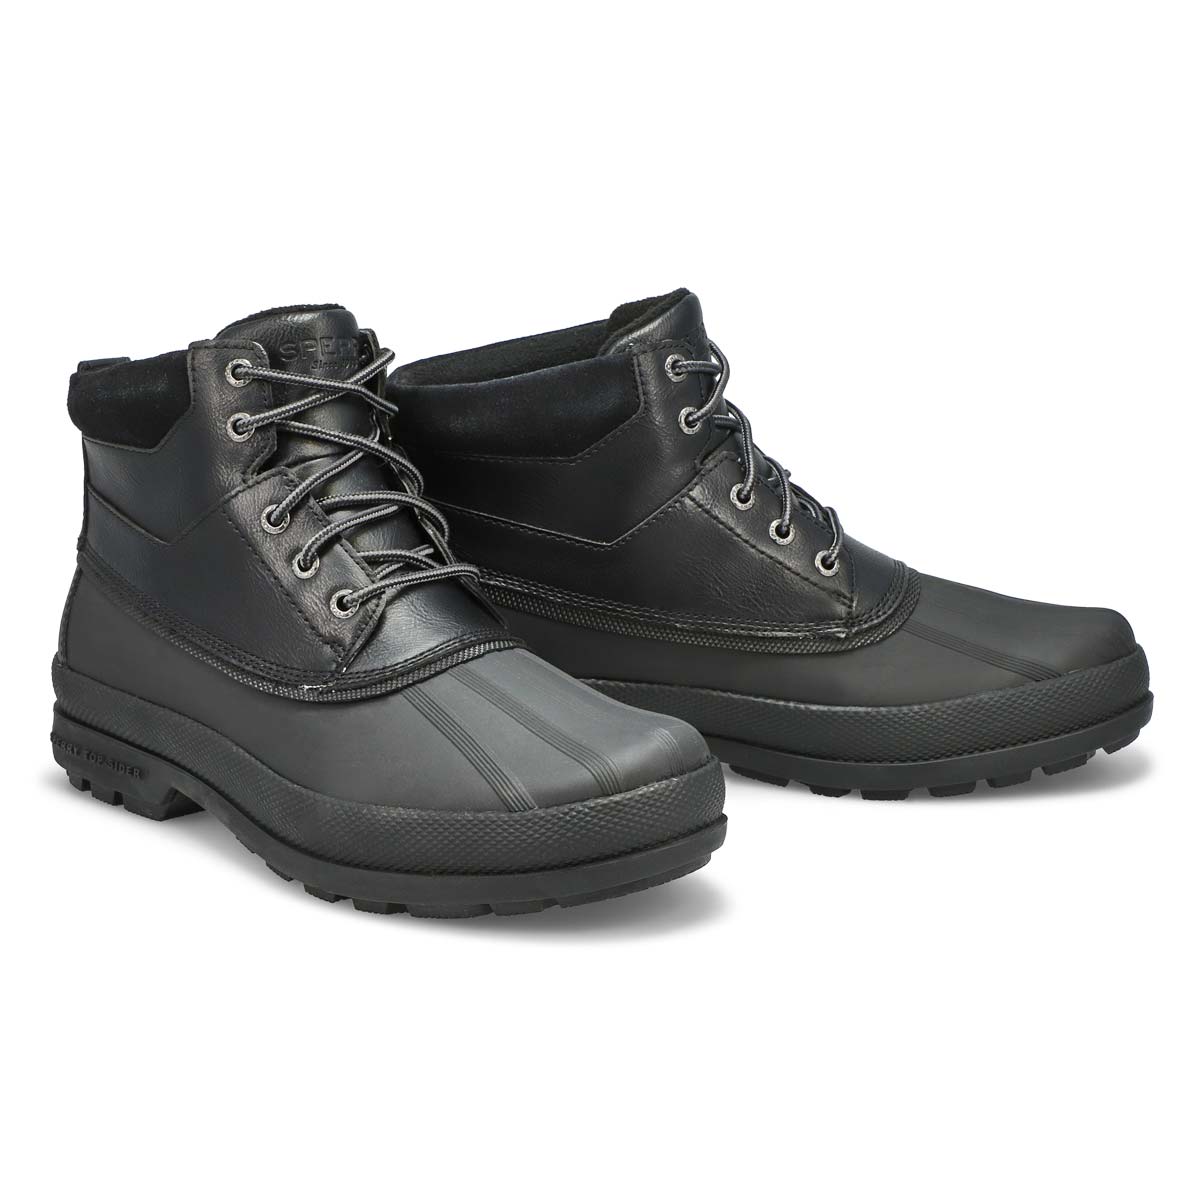 Men's Cold Bay Chukka Waterproof Boot - Black